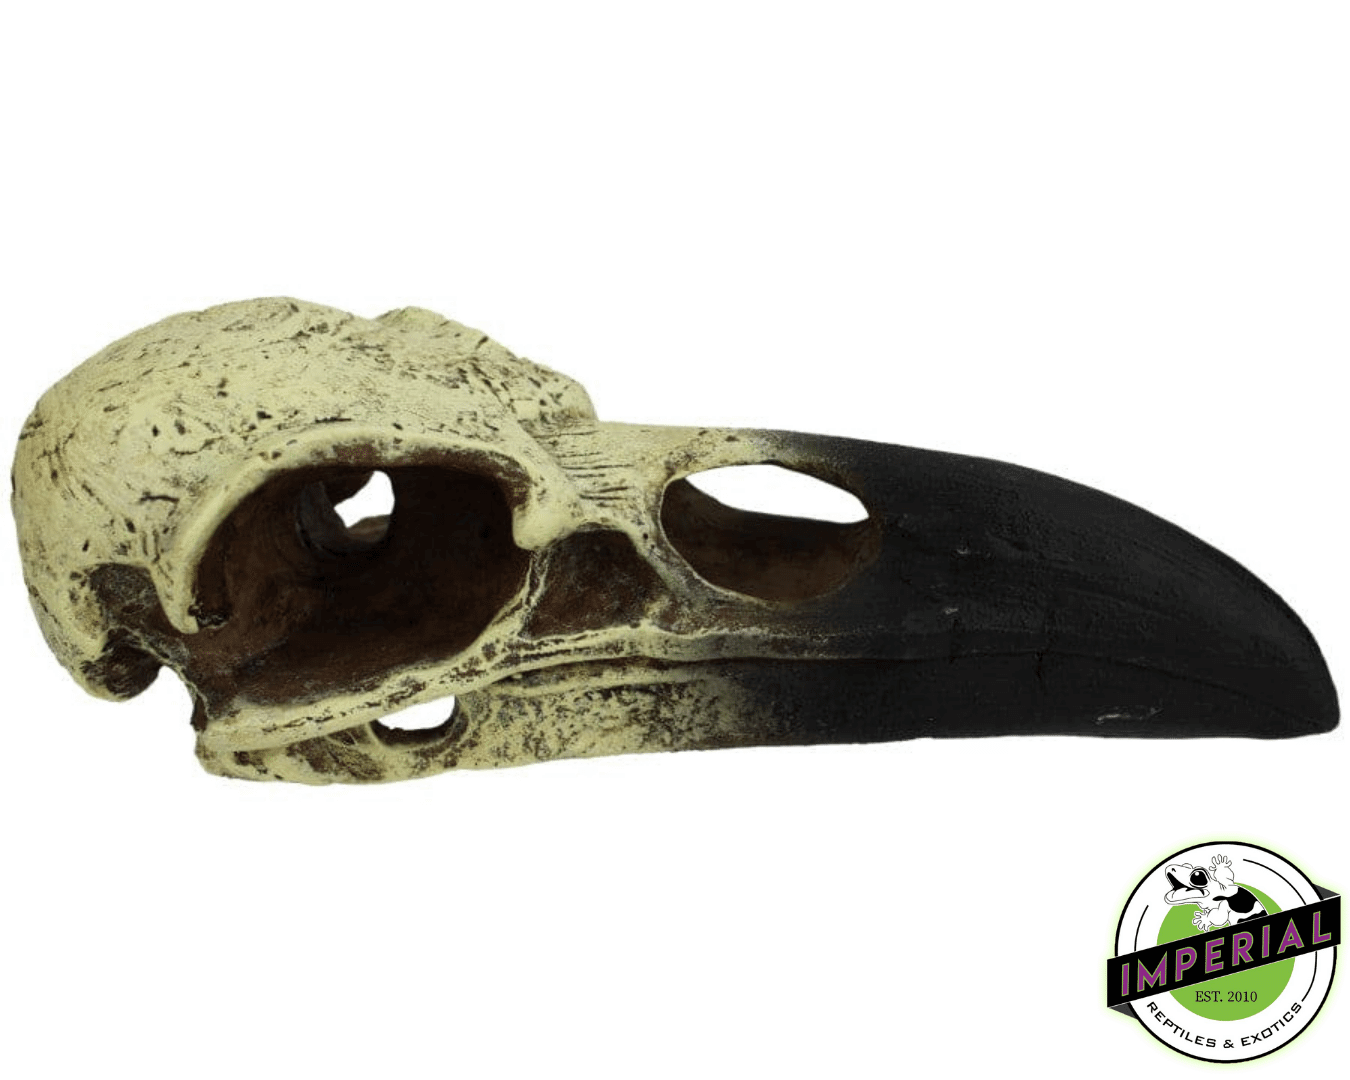 raven skull hide for sale online, buy reptile supplies near me